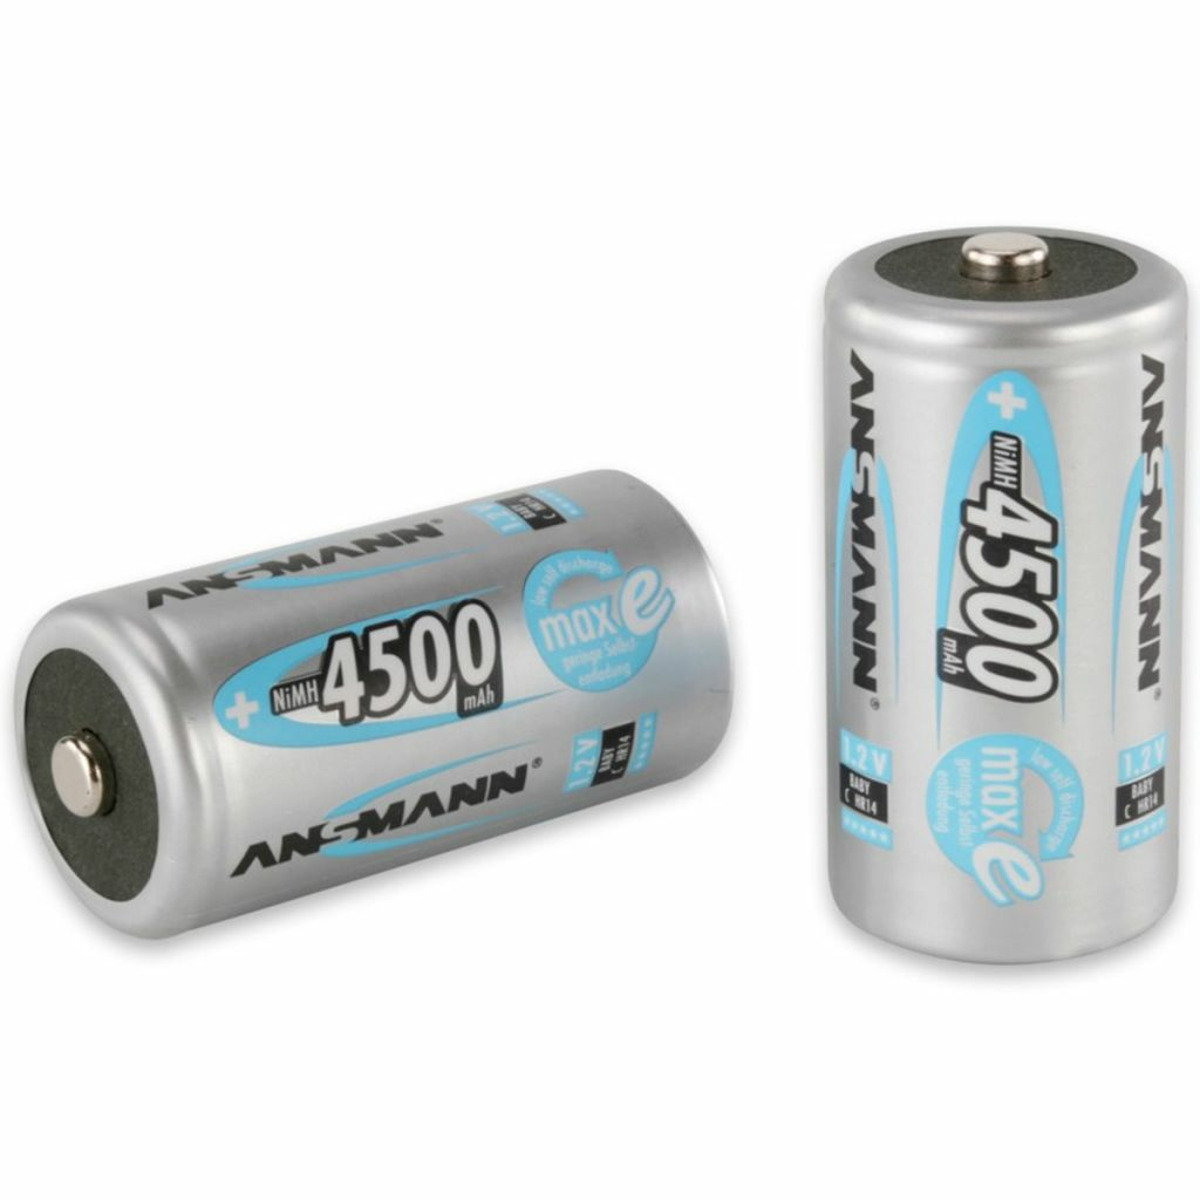 4500 ANSMANN Ni-MH, Batterie, Stück 420344 2 wiederaufladbare mAh NiMH 1.2 Volt,